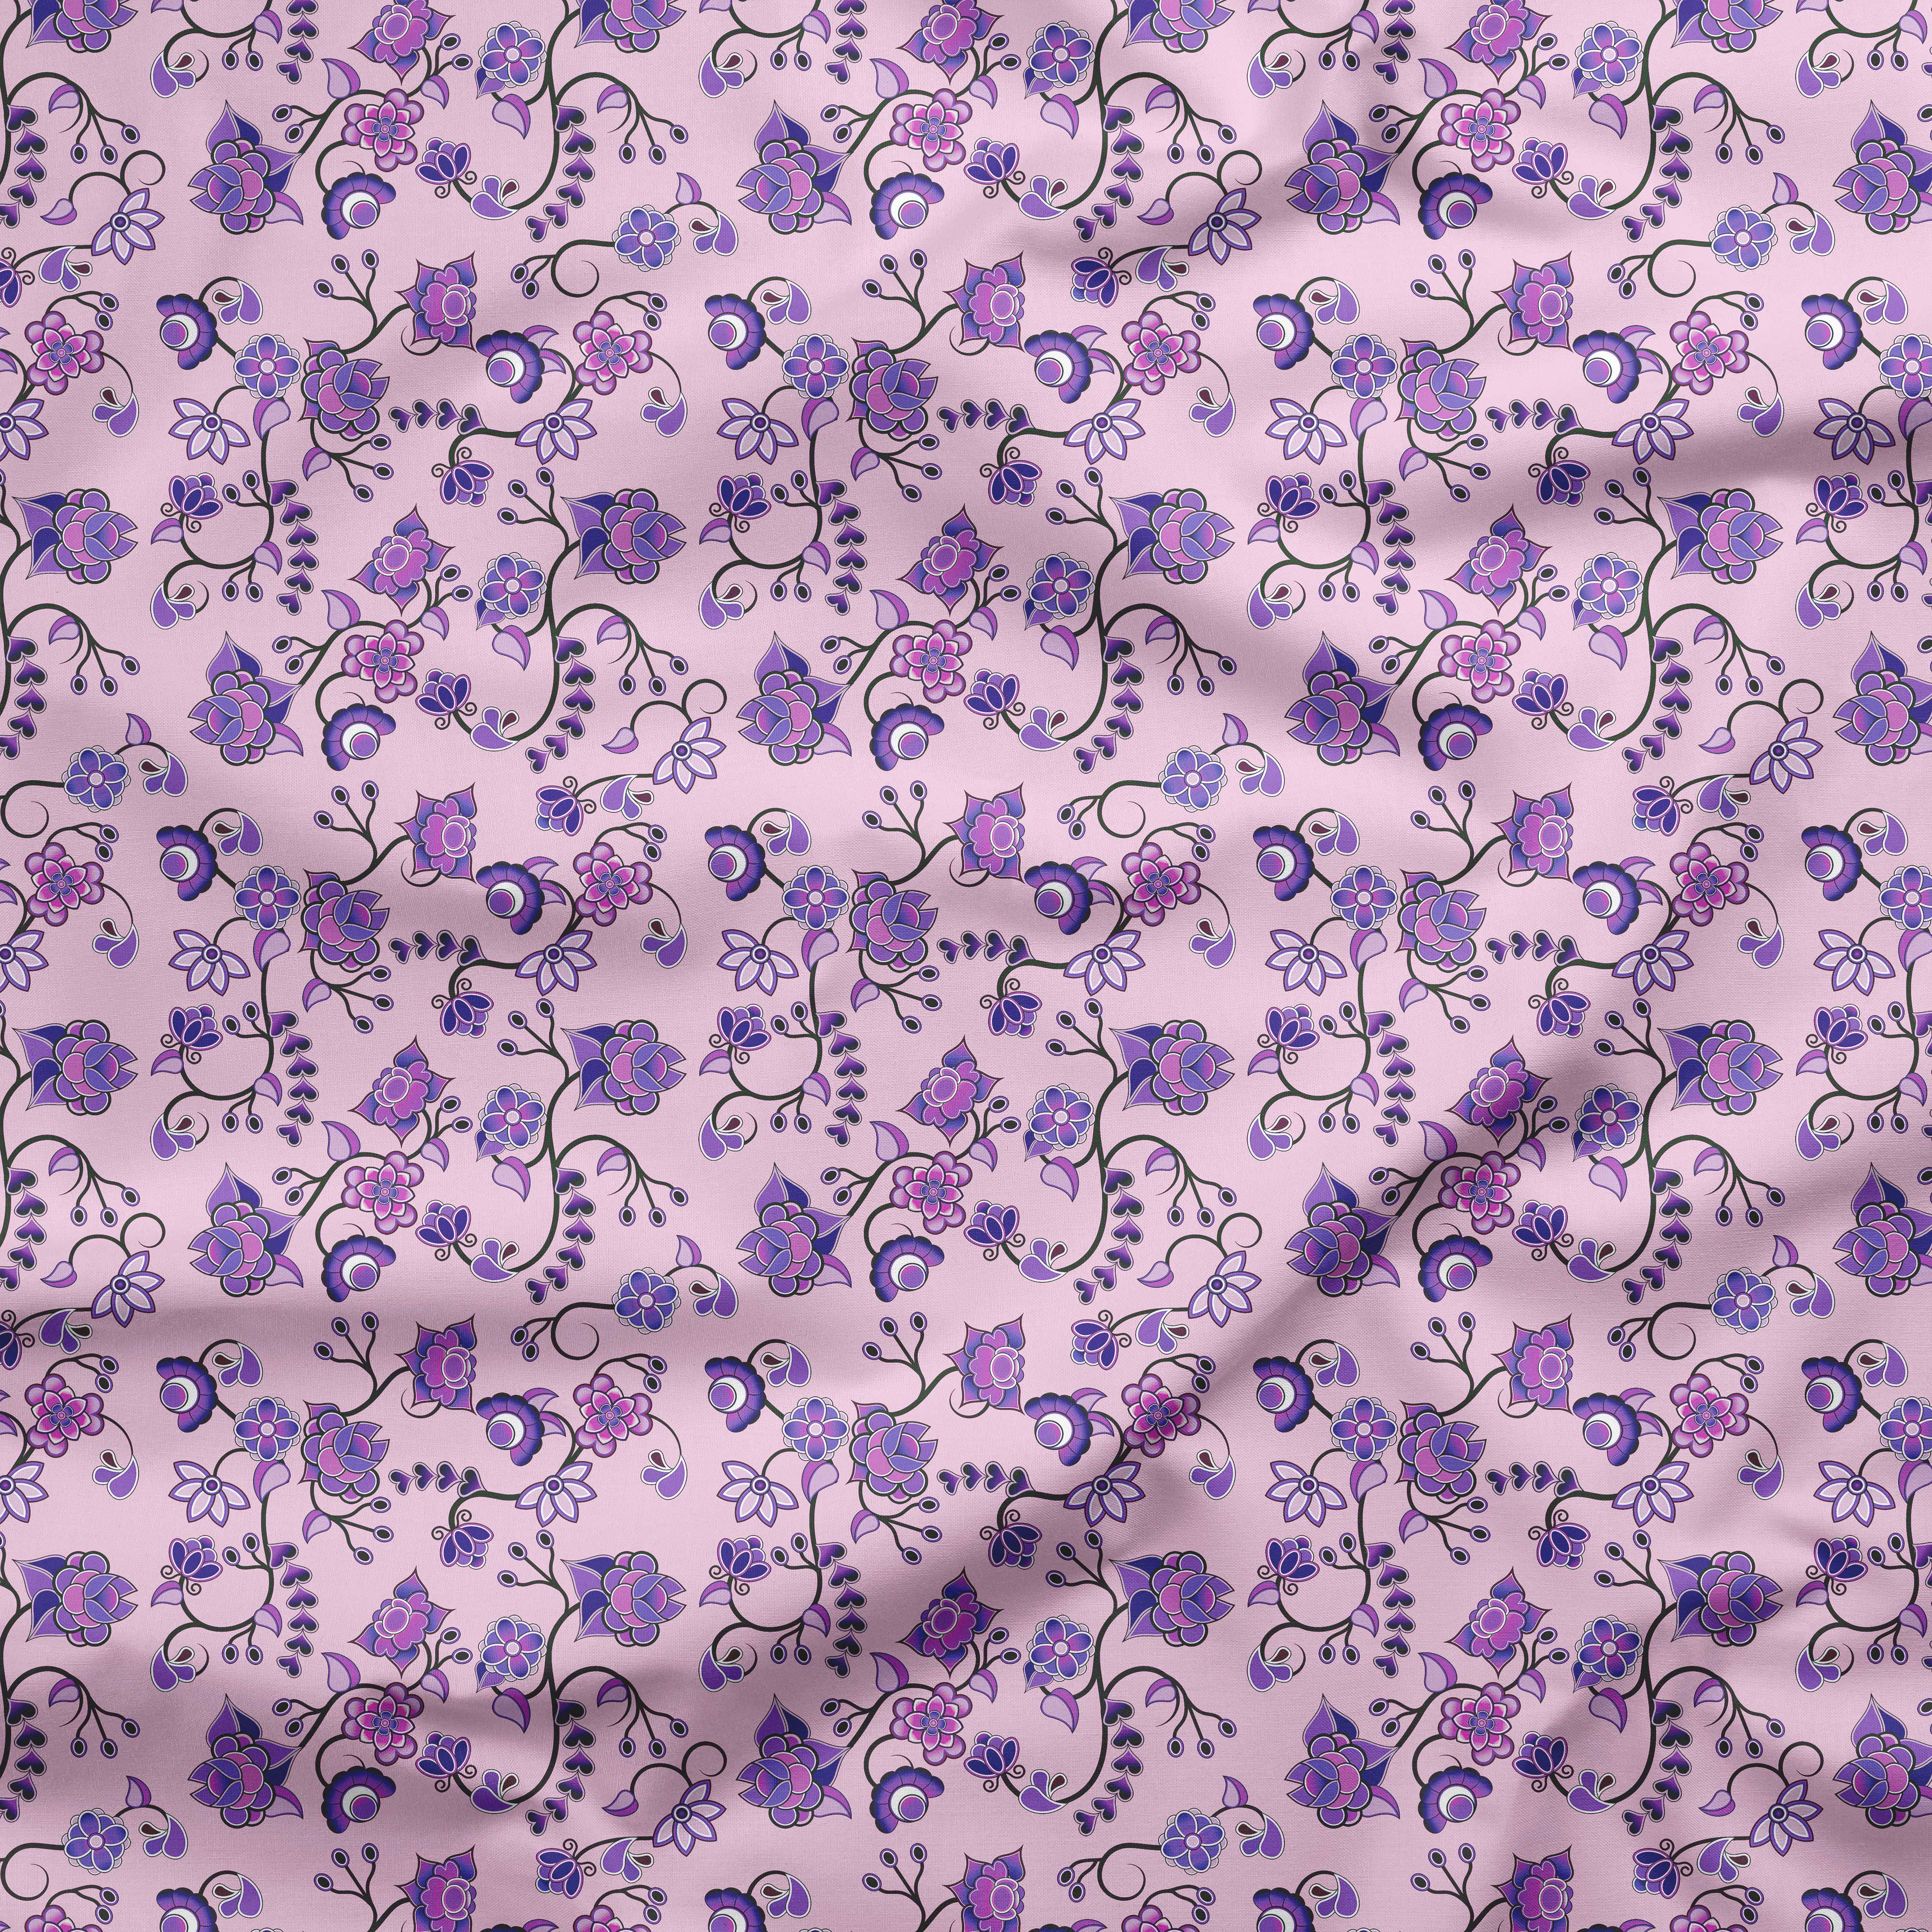 Purple Floral Amour Cotton Poplin Fabric By the Yard Fabric NBprintex 